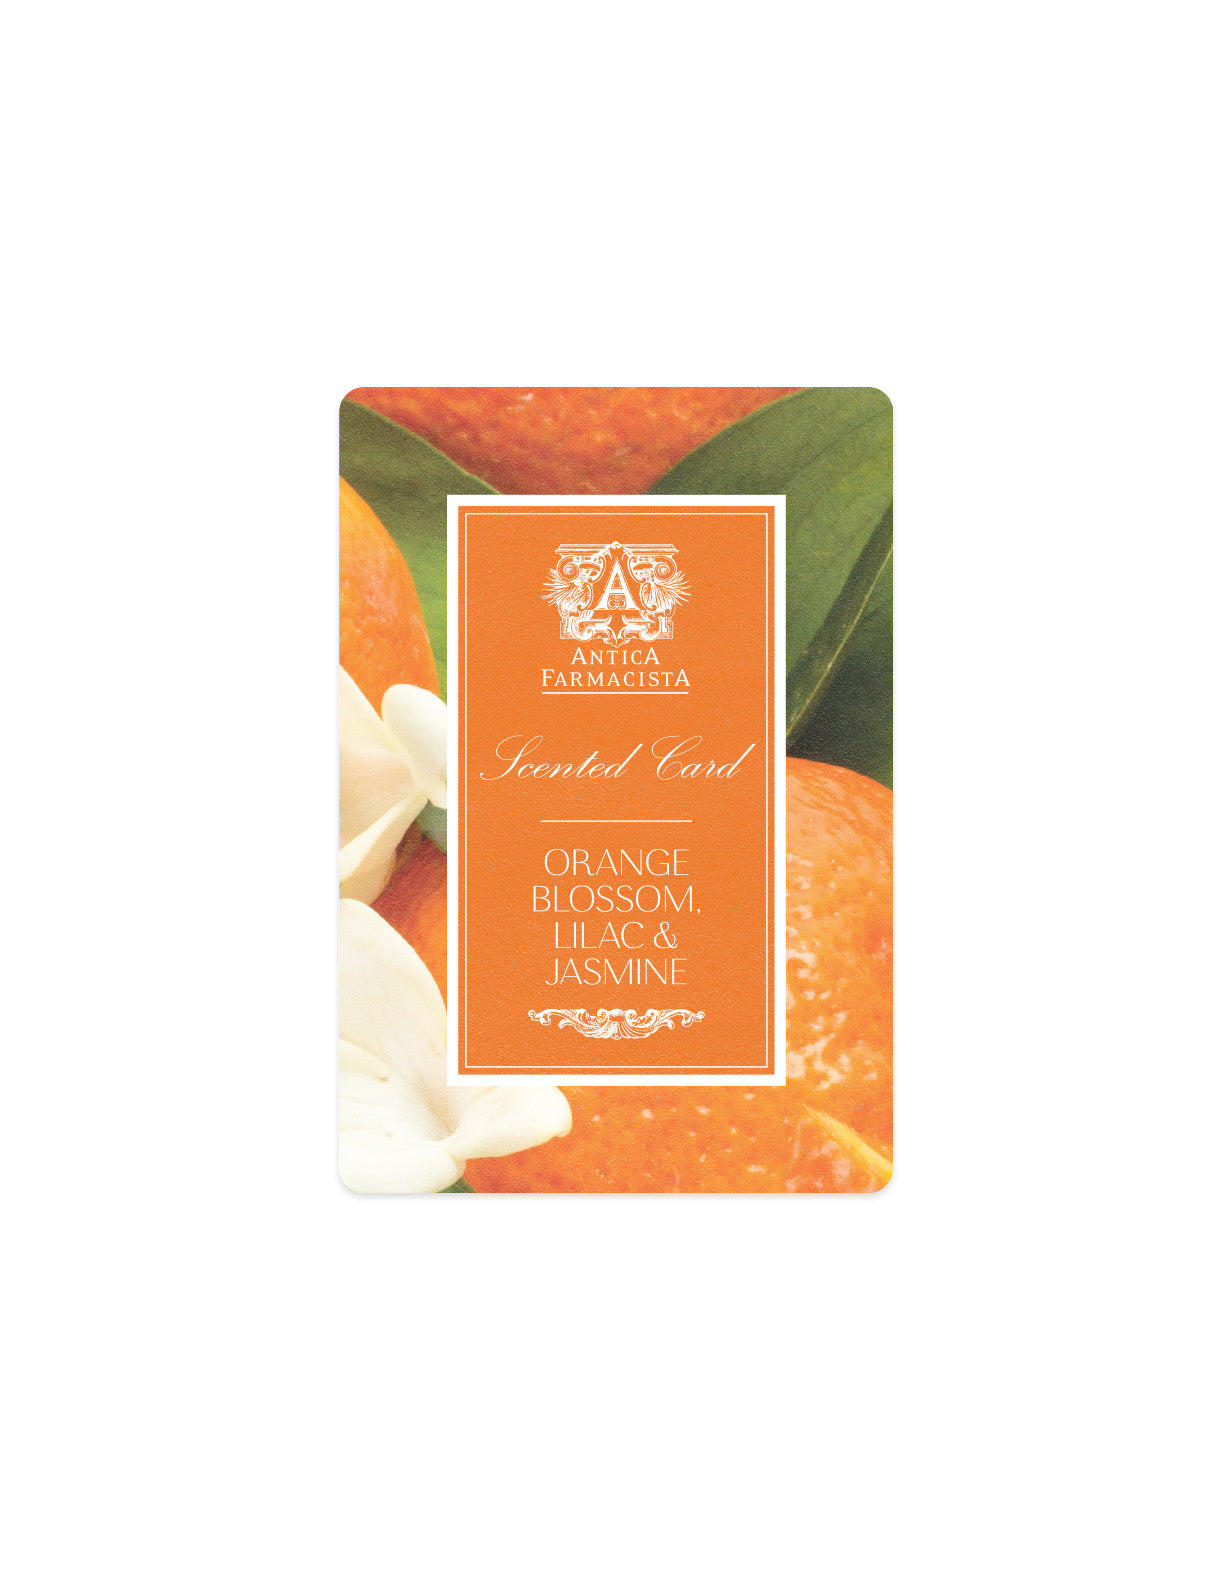 Scented Card - Orange Blossom, Lilac & Jasmine